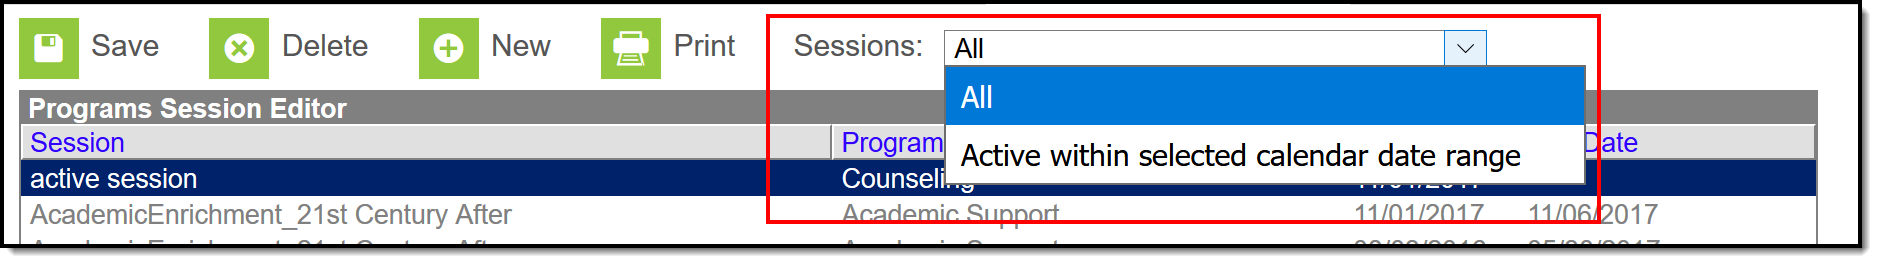 Screenshot highlighting sessions options.